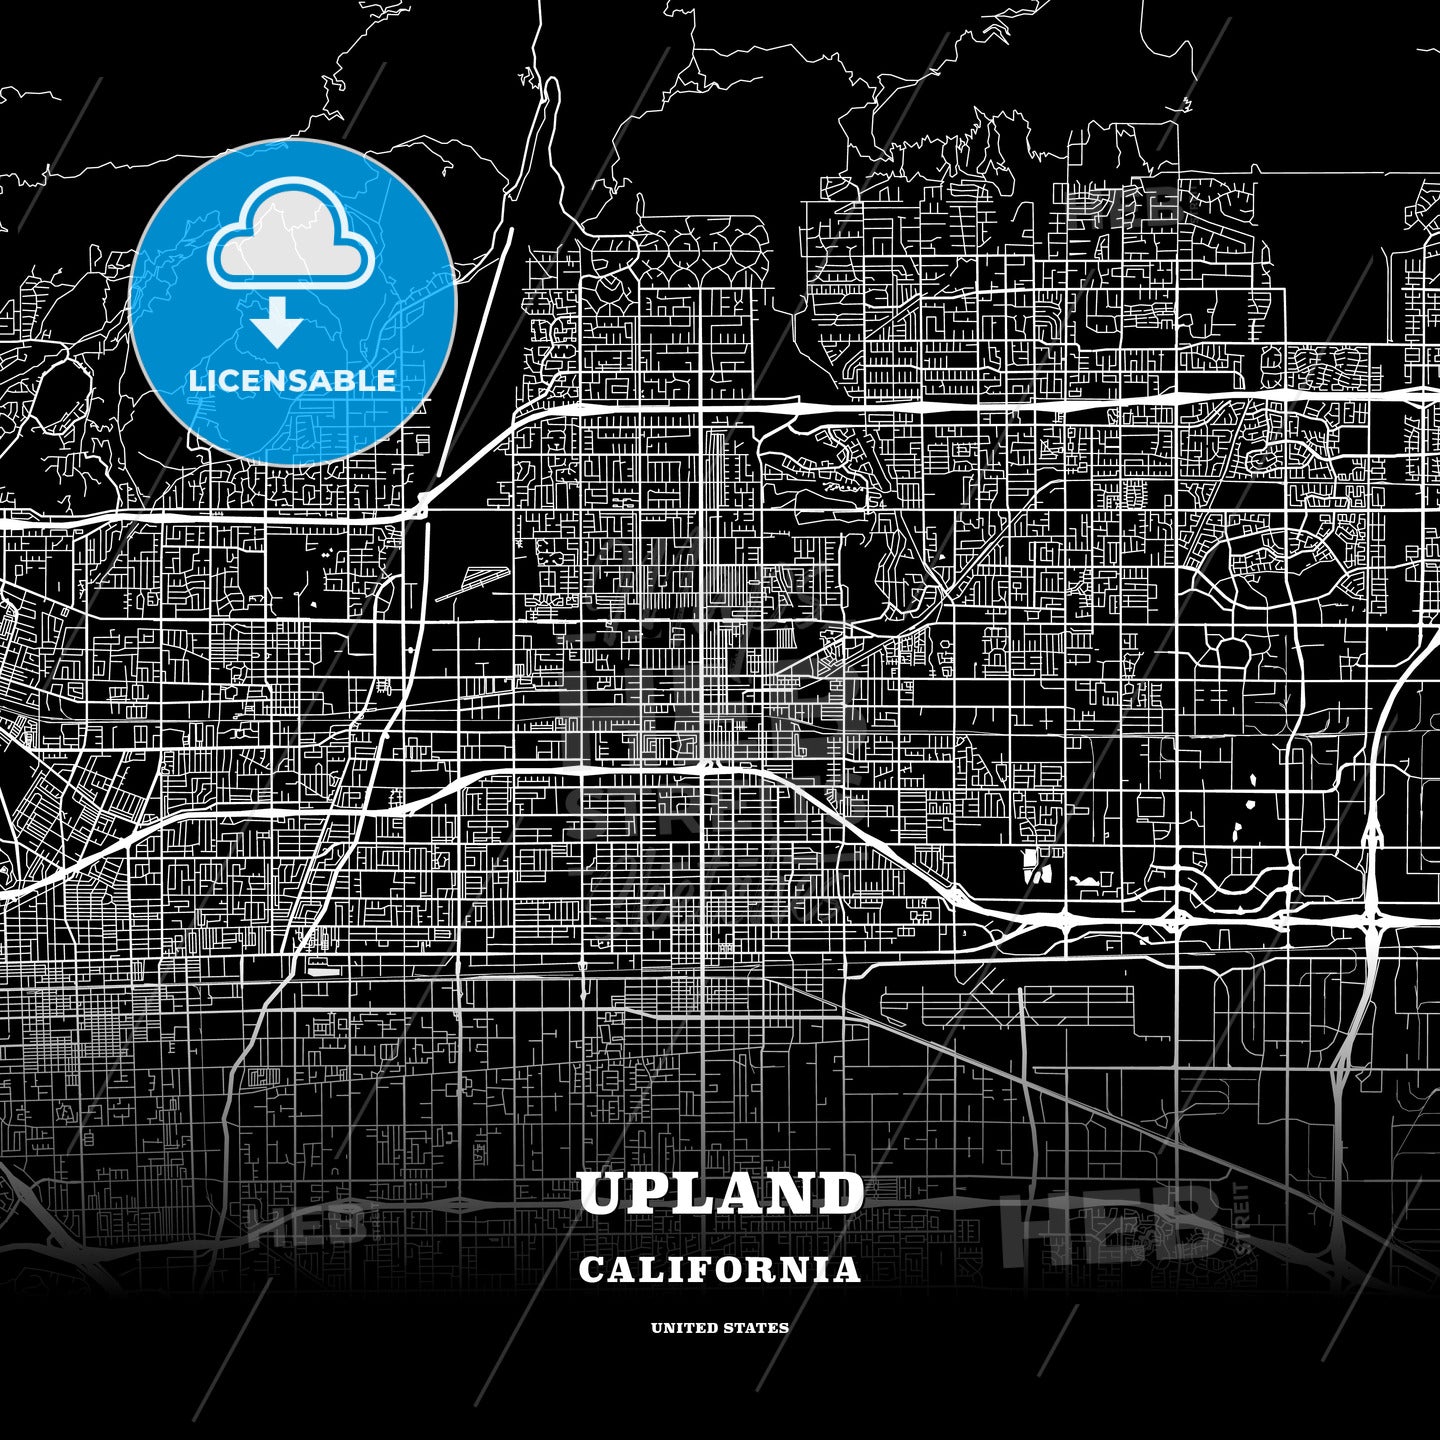 Upland, California, USA map